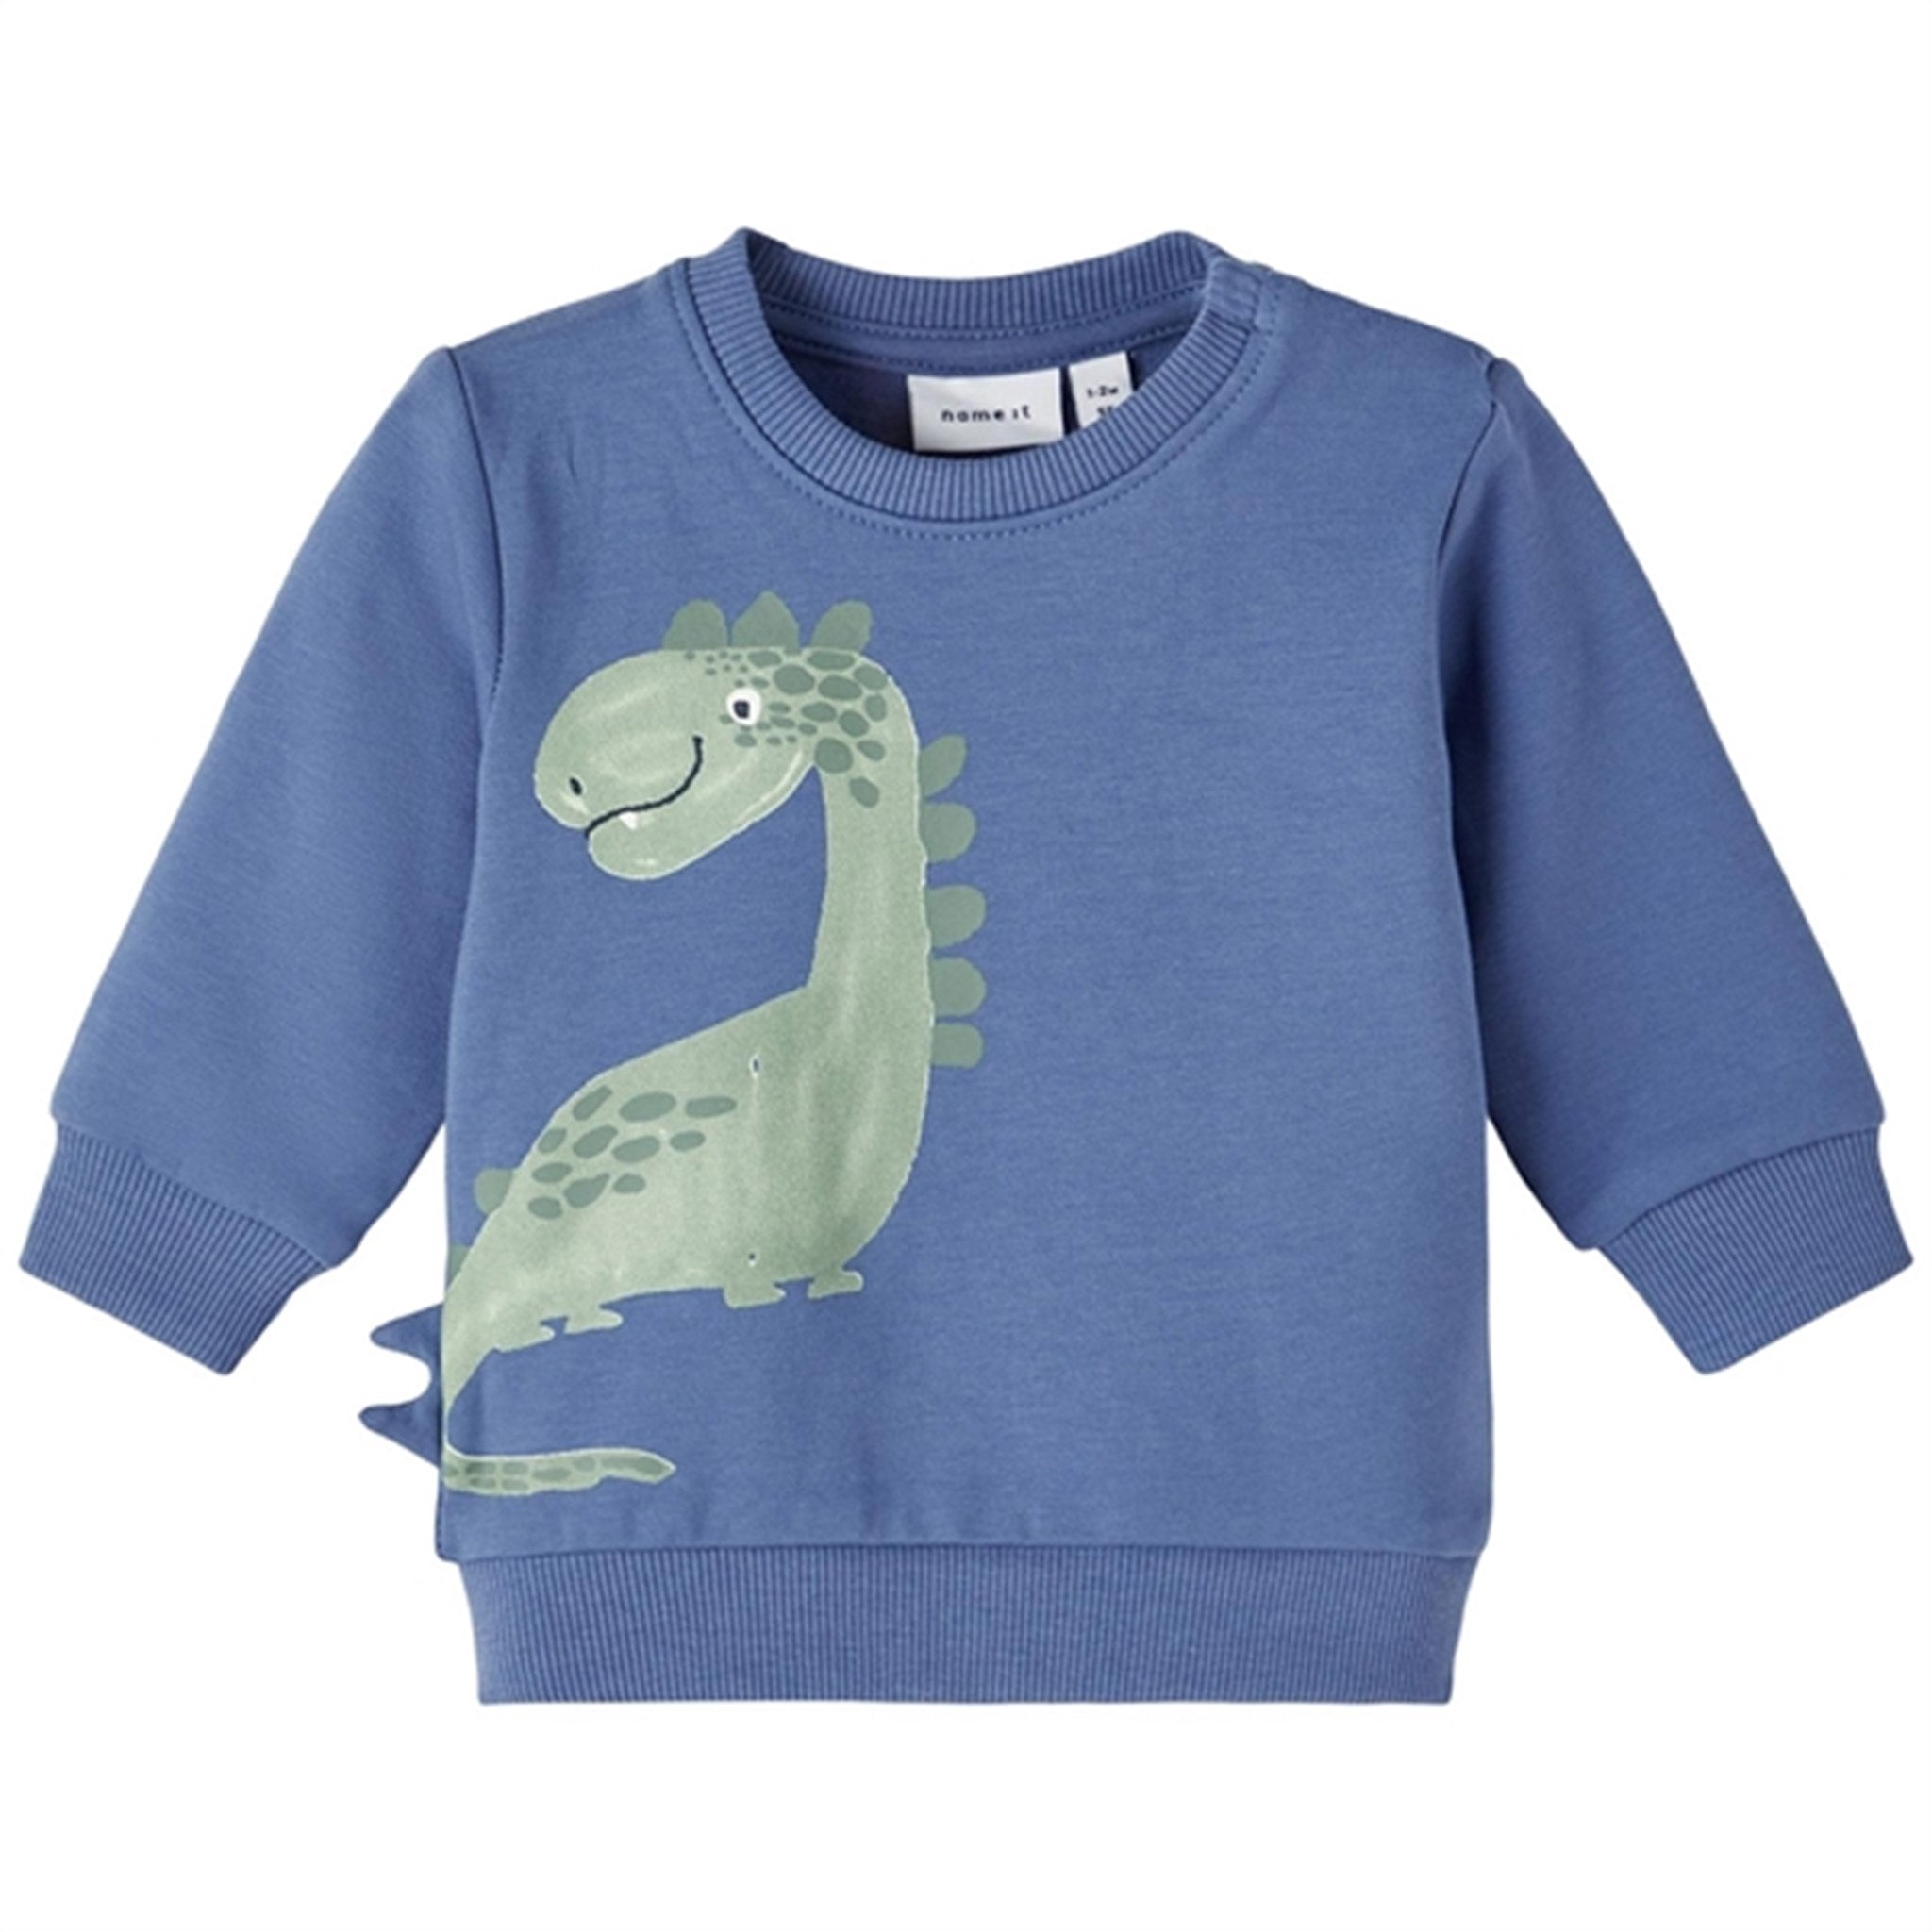 Name it Bijou Blue Tas Dinosaur Sweatshirt